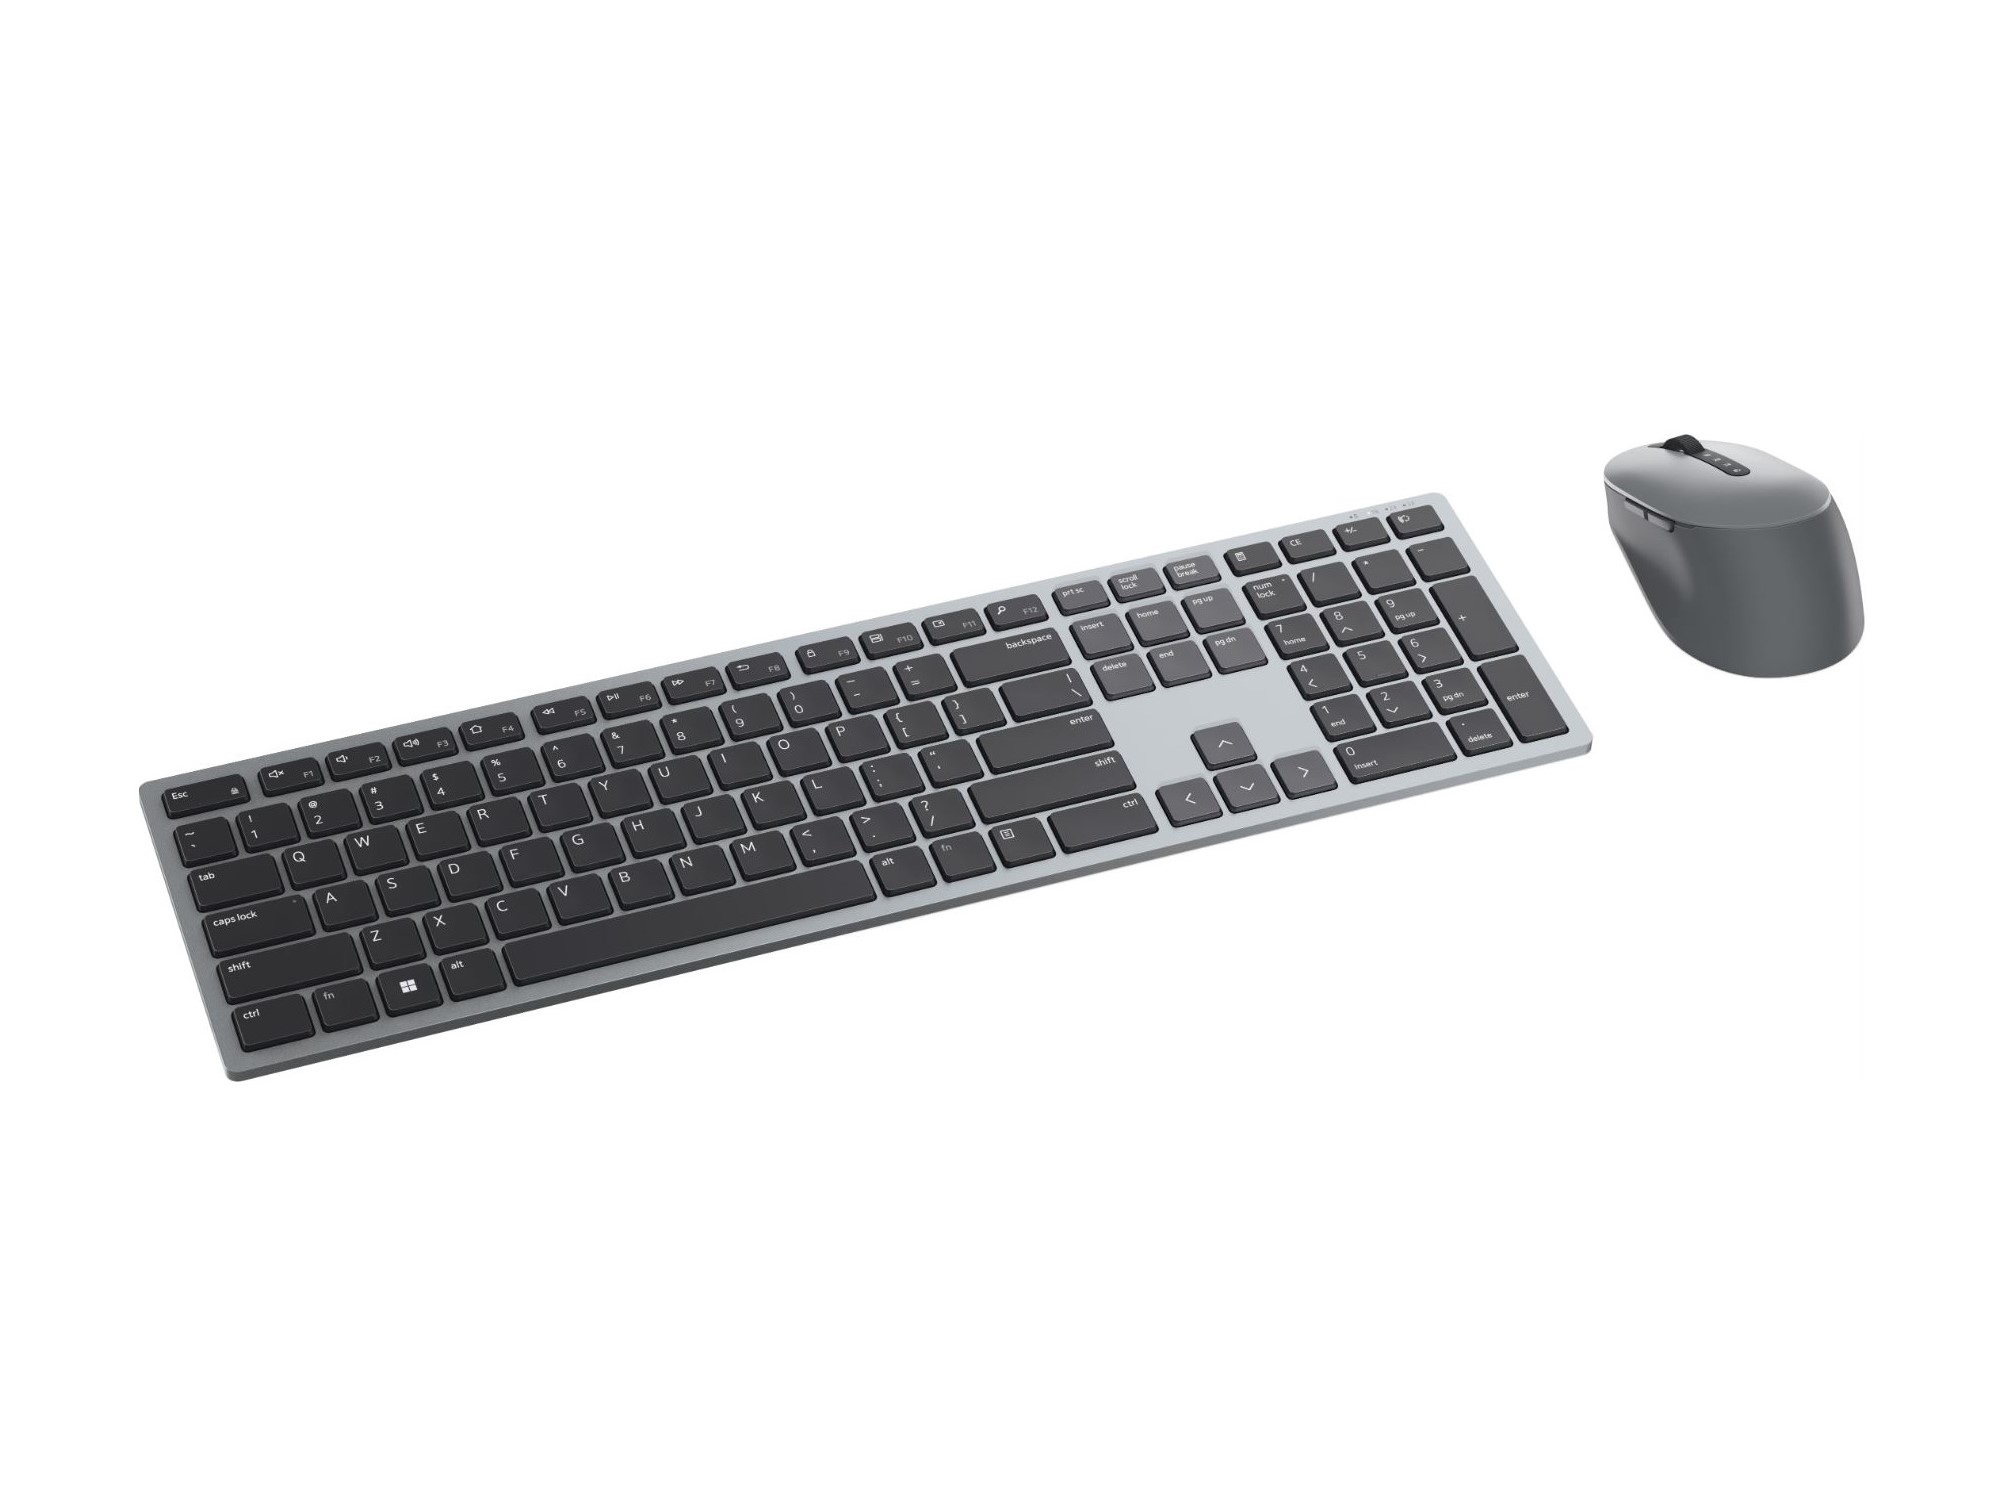 Imagem do produto combinado de mouse e teclado Dell Premiere km7321w.